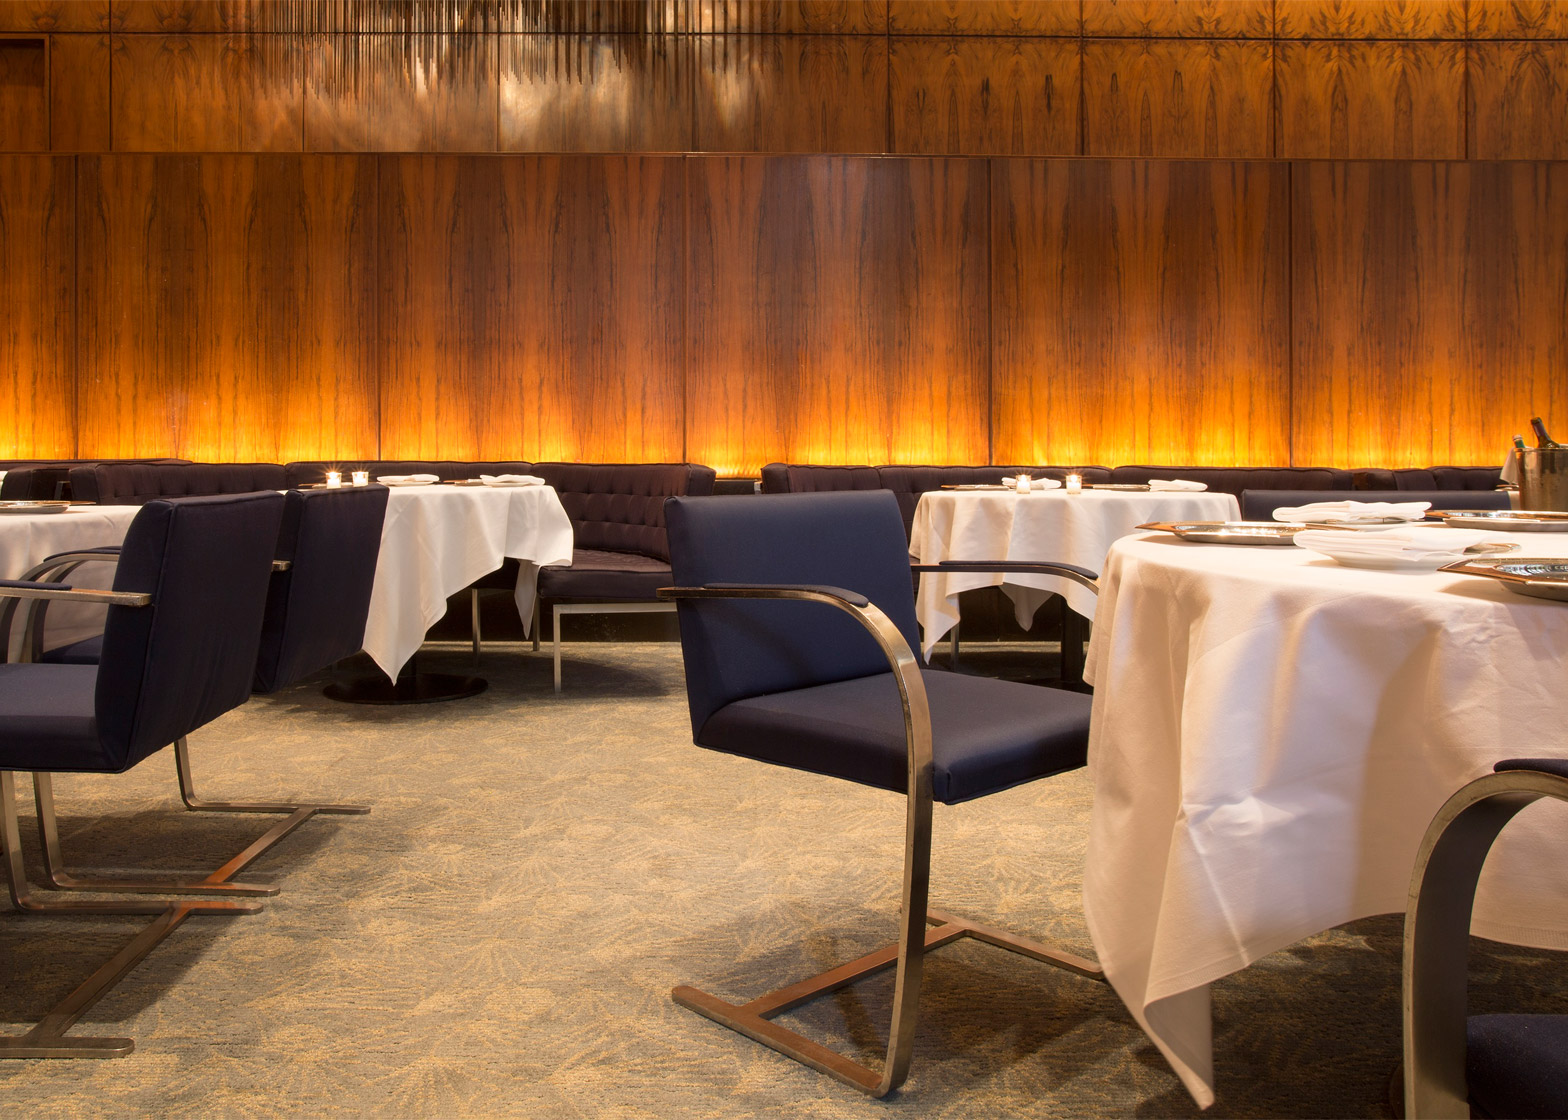 four-seasons-restaurant-interior-seagram-building-philip-johnson-mies-van-der-rohe-auction-new-york-city-usa-news_dezeen_1568_4